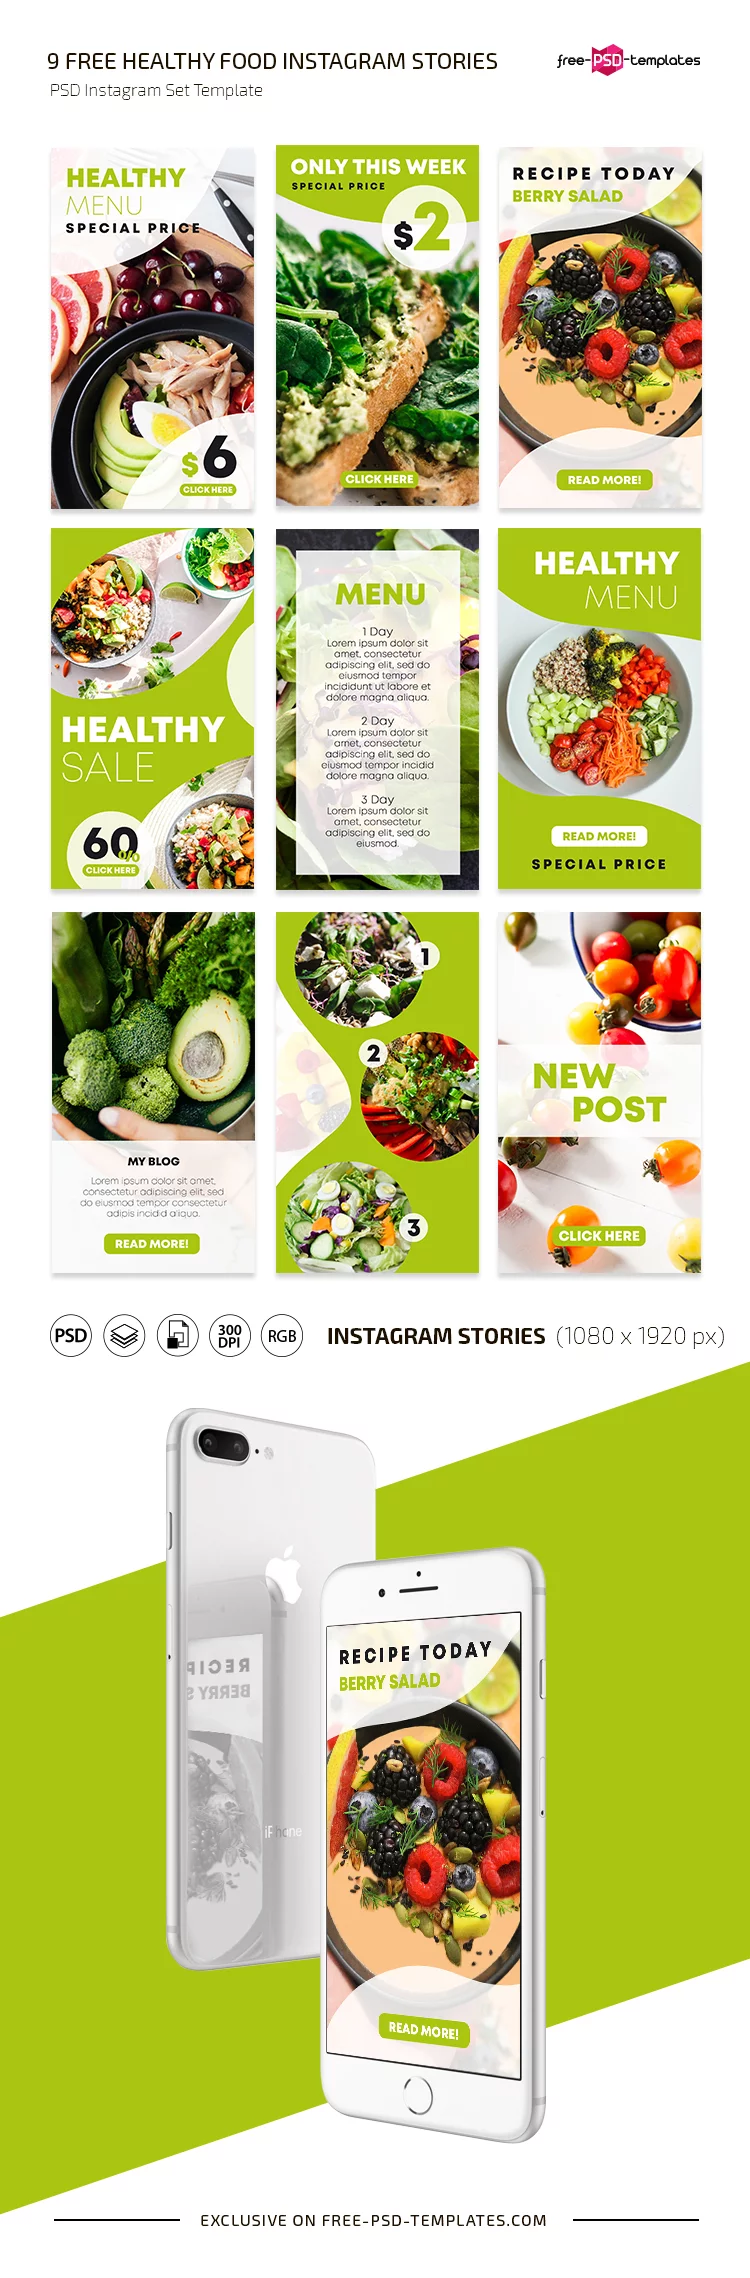 Free Healthy Food Instagram Stories Set Template in PSD